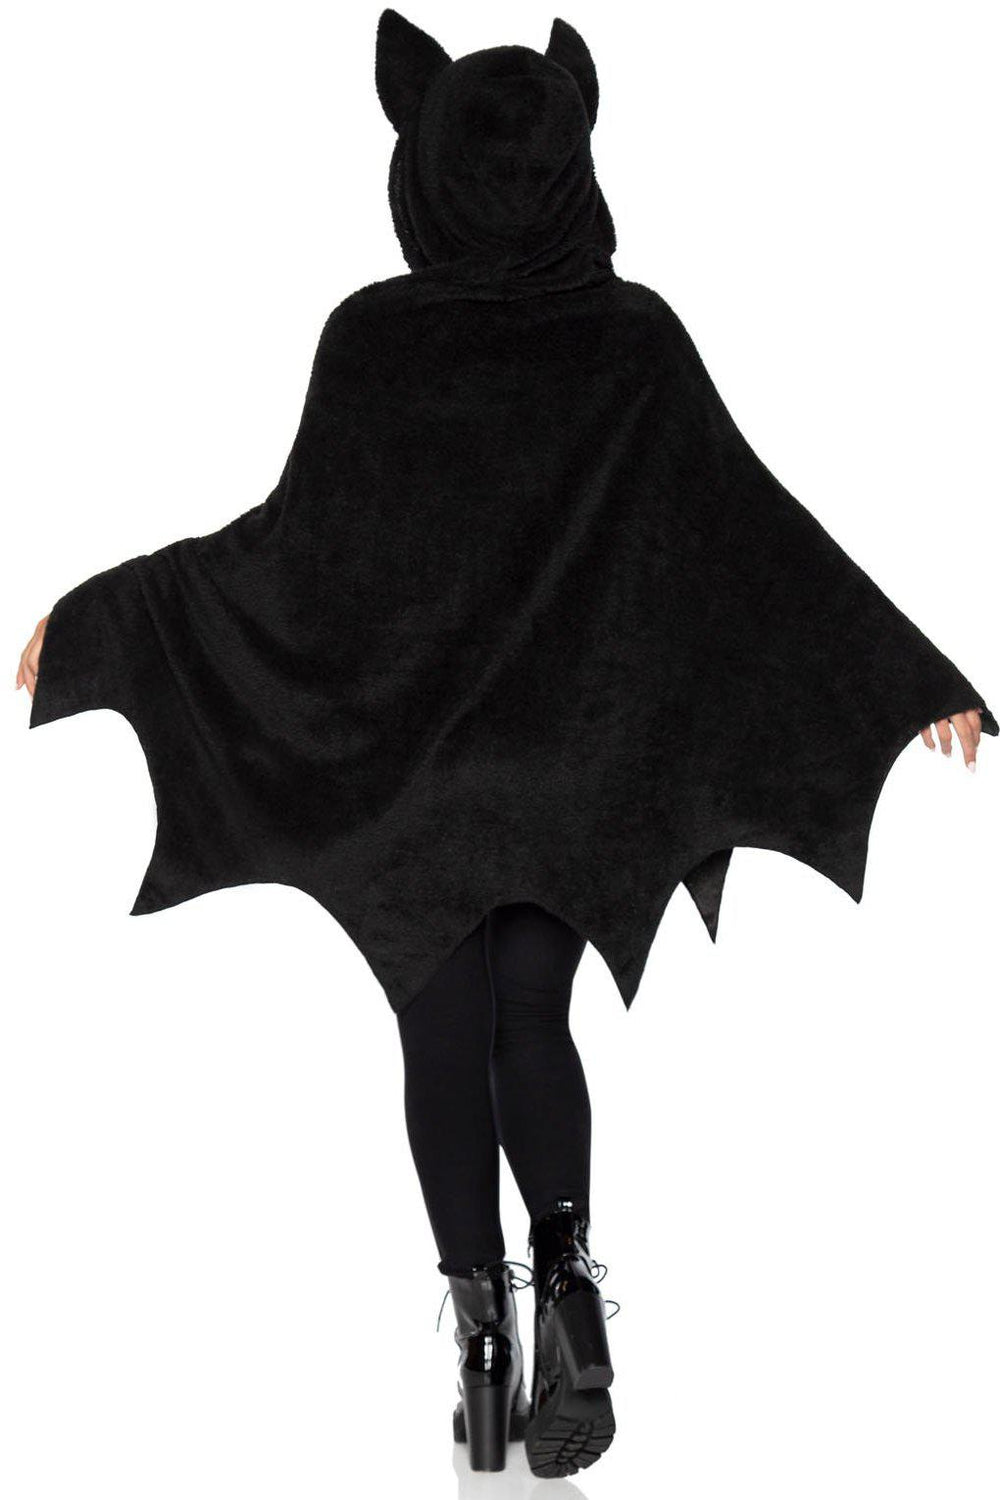 Bat Poncho Costume-Animal Costumes-Leg Avenue-Black-O/S-SEXYSHOES.COM